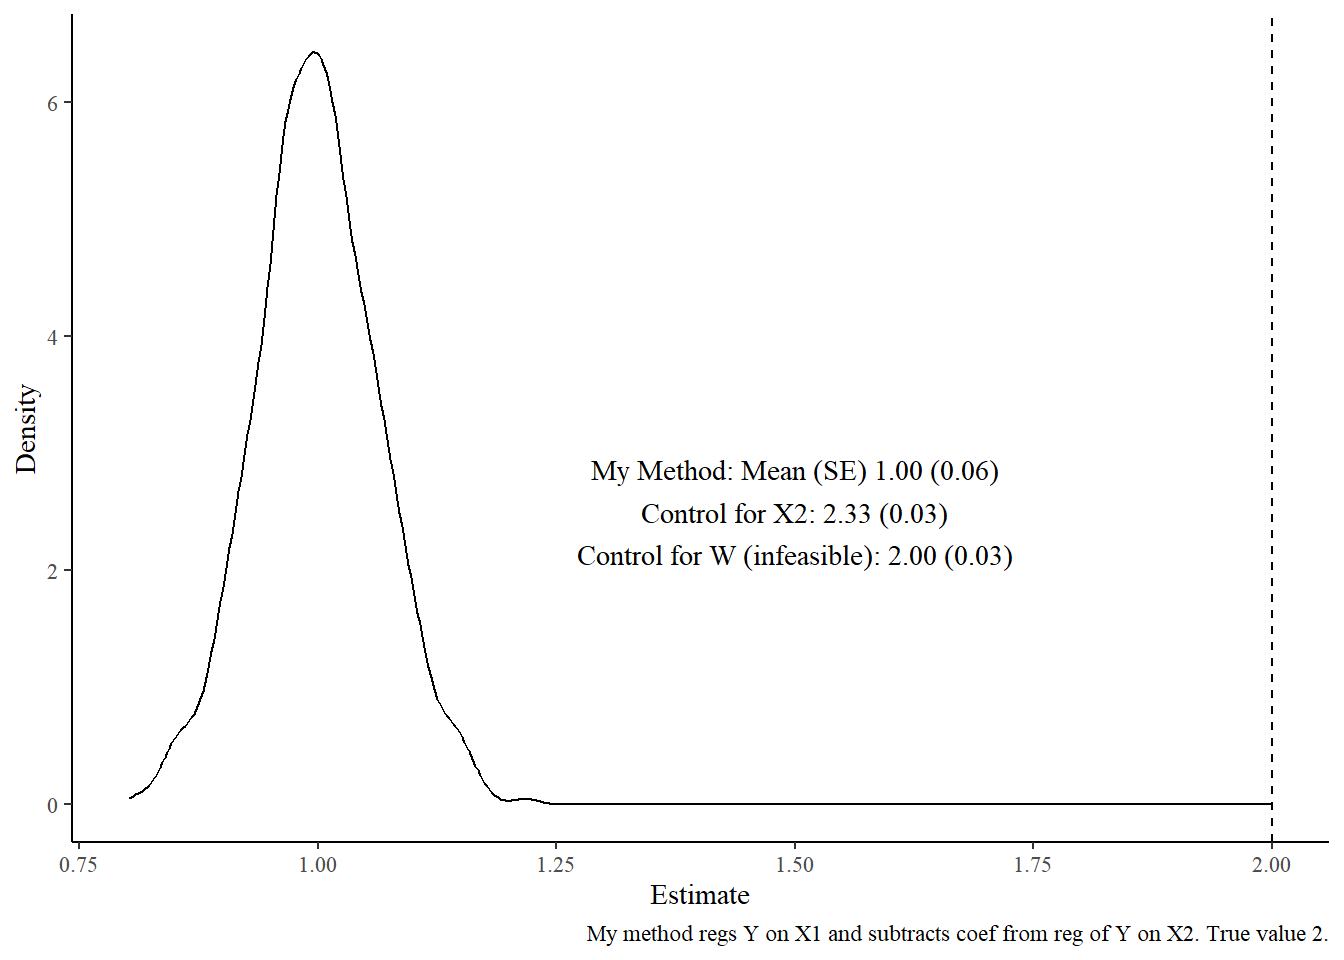 Simulated sampling distribution centered around 1